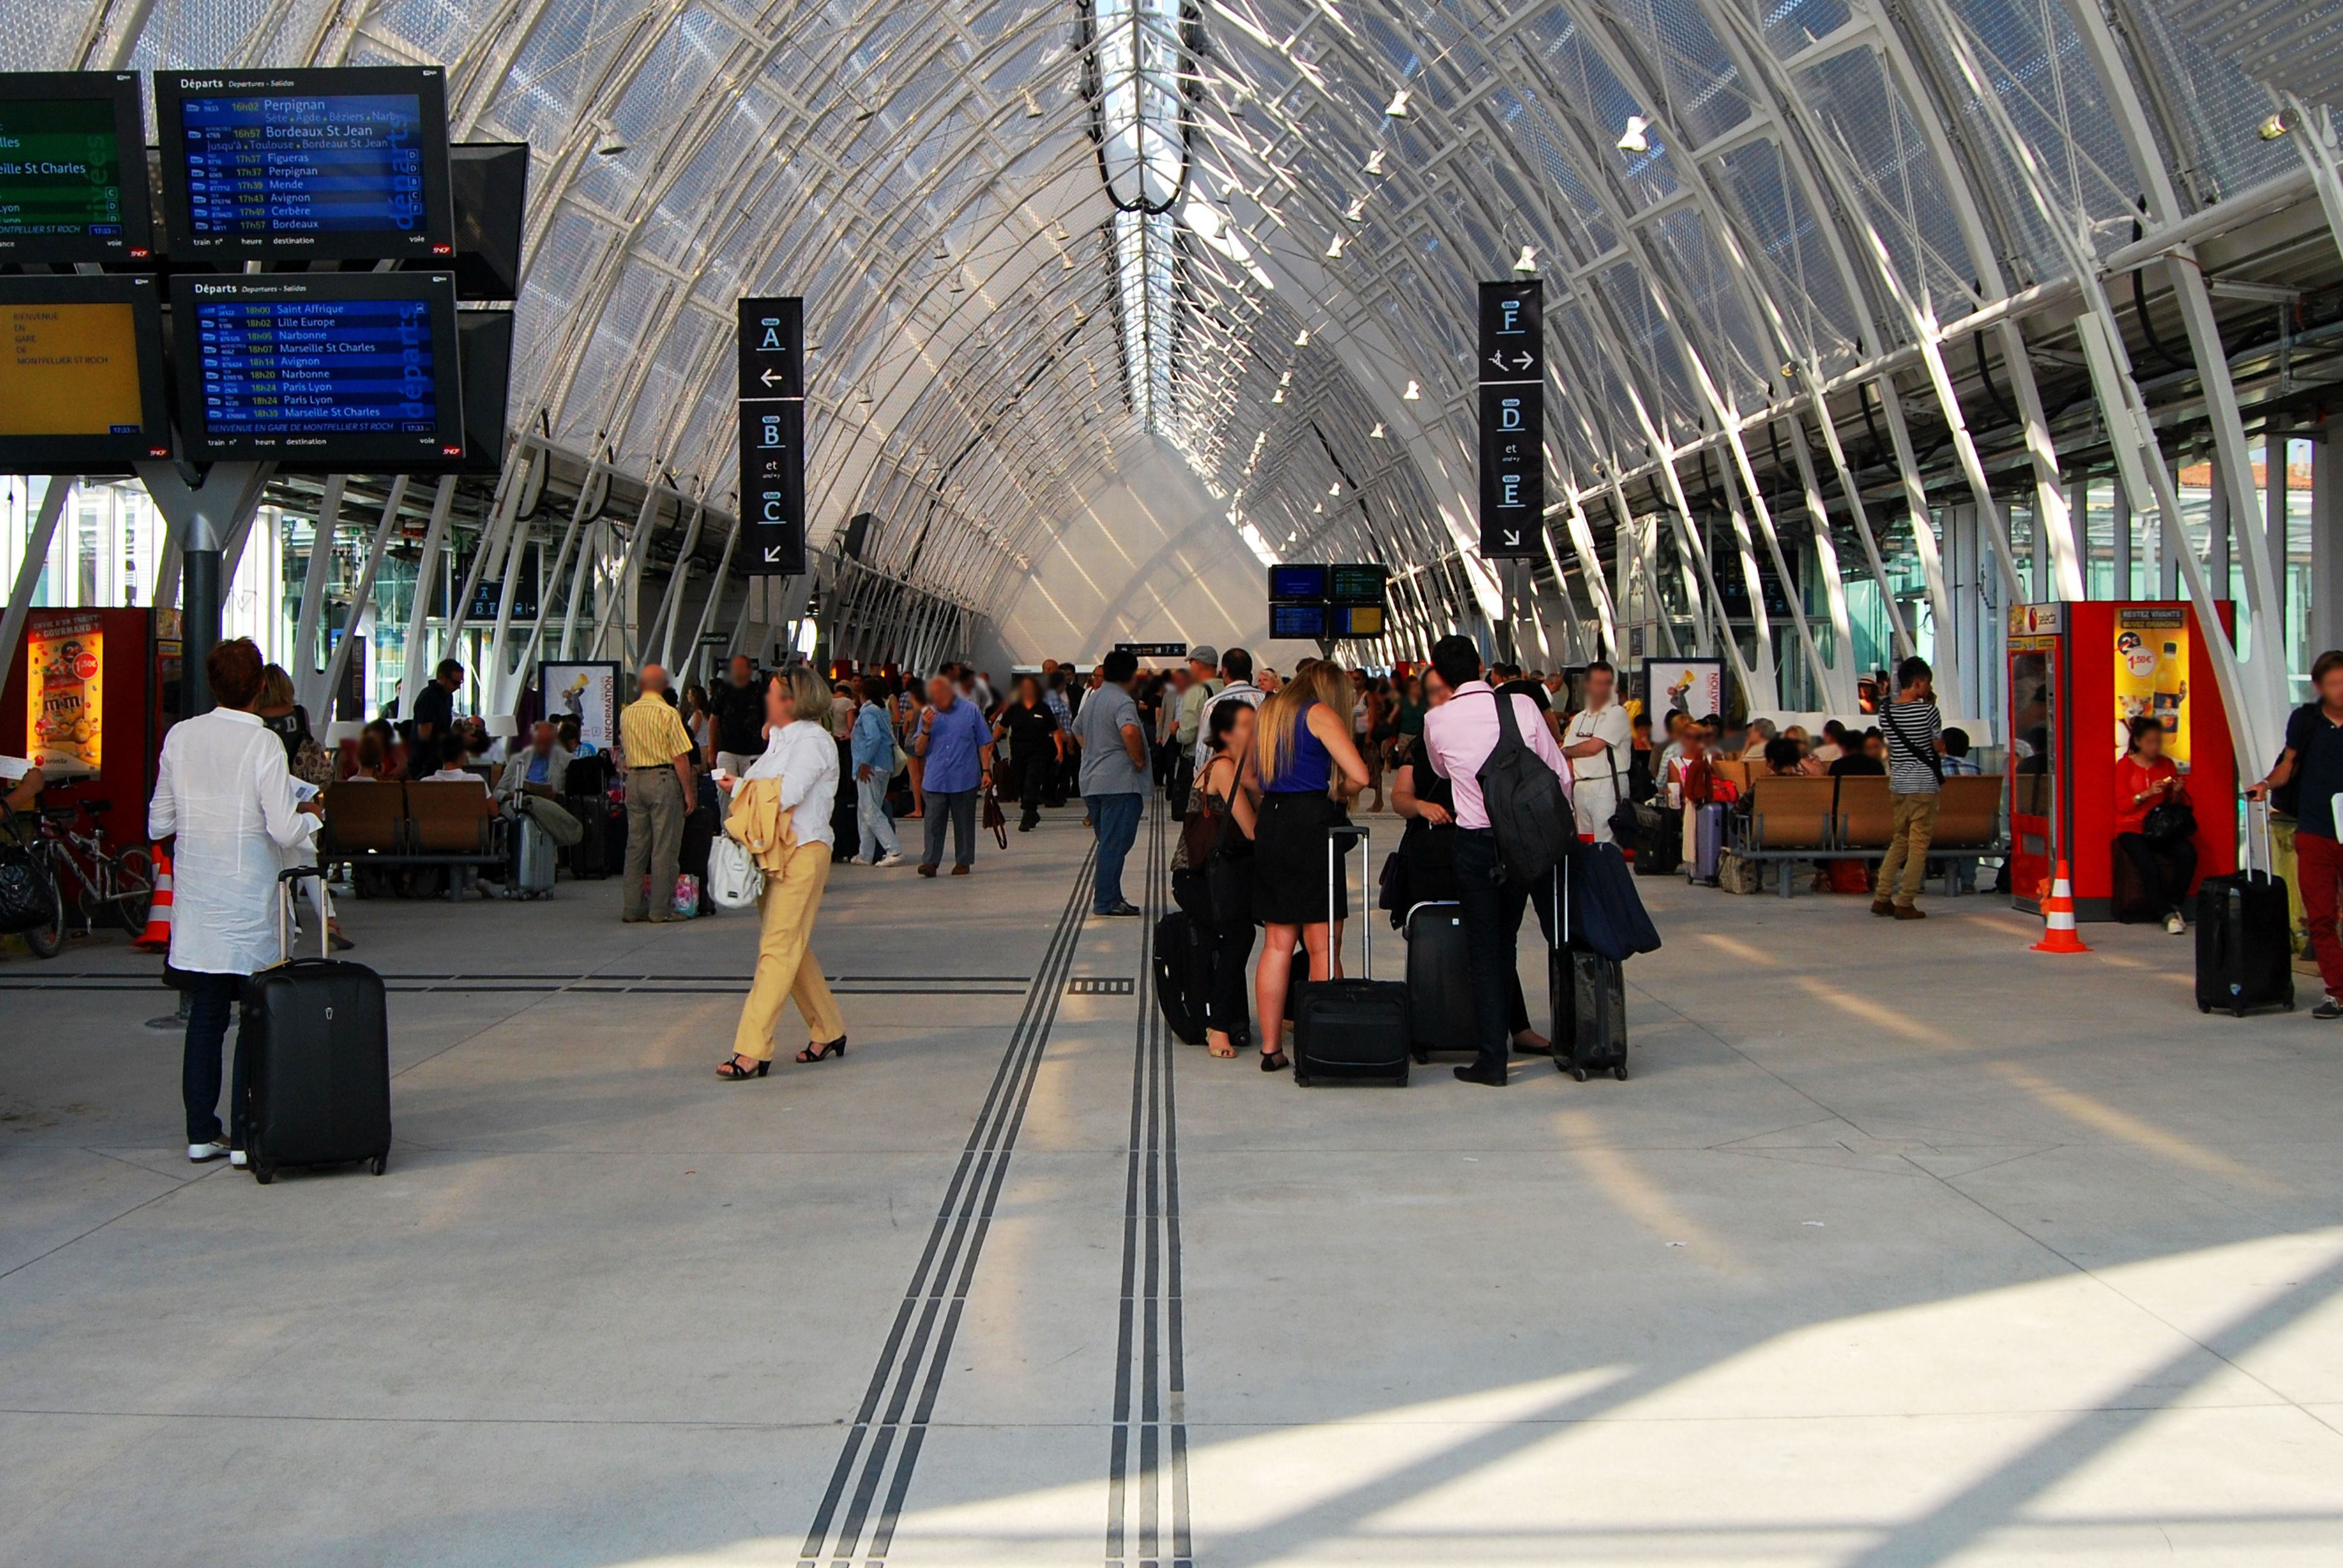 Halle de gare ferroviaire moderne